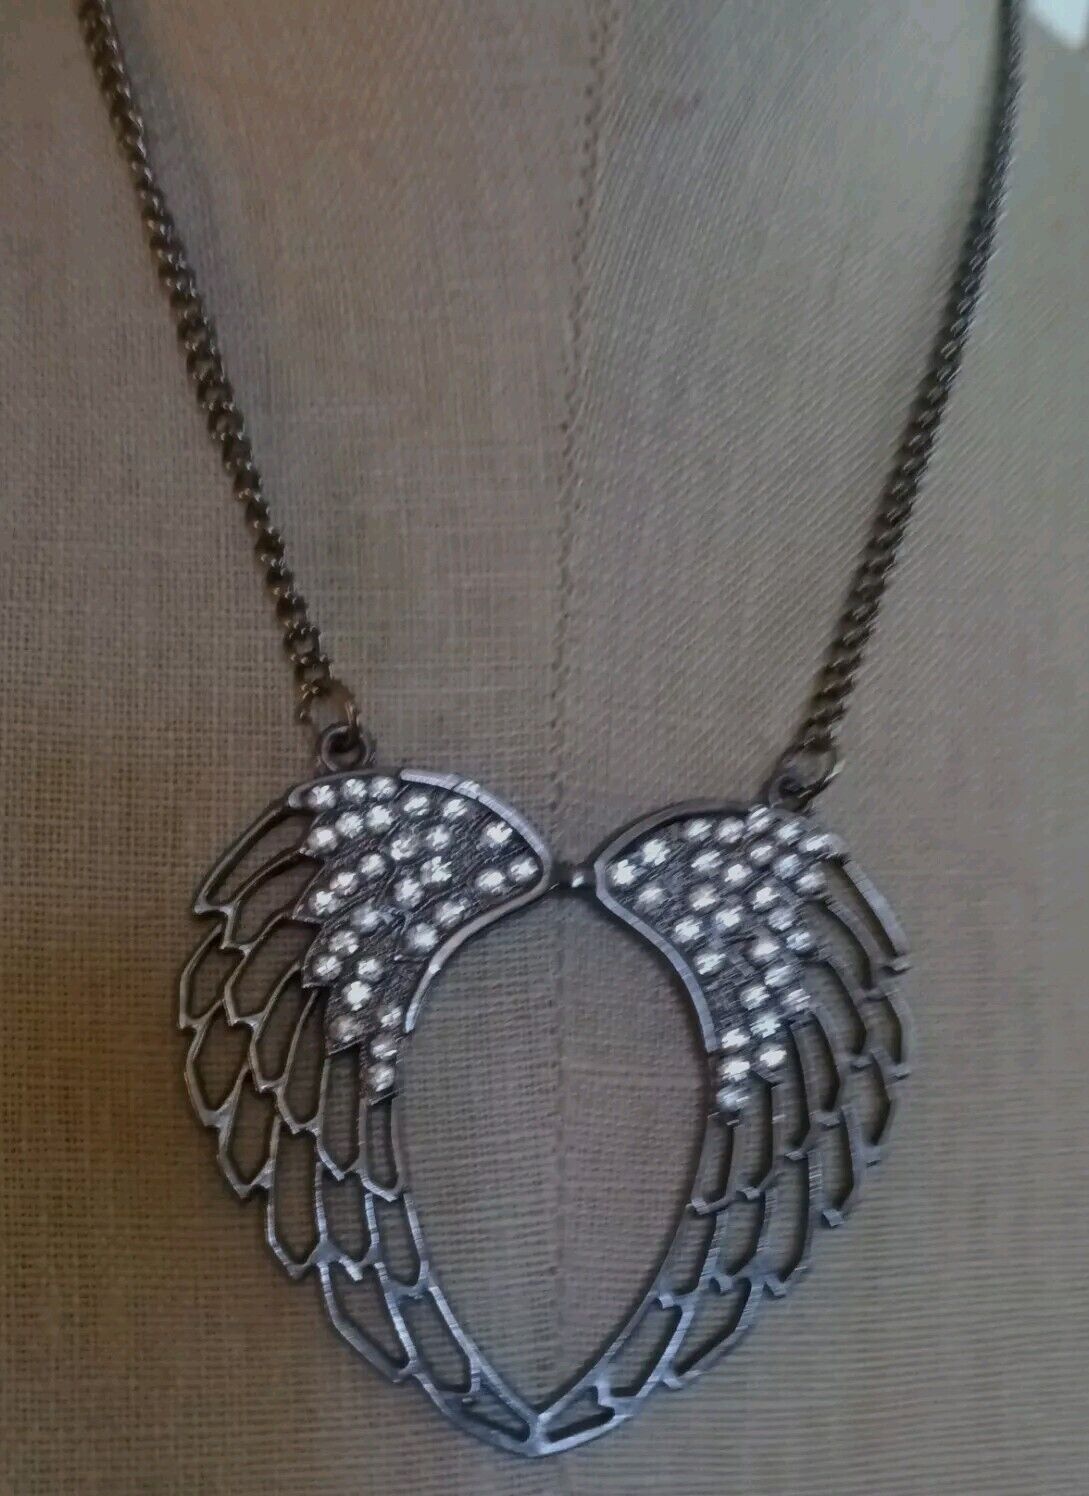 Vintage Necklace Silver Tone Angel Wings Rhinestone Embellished Unbranded 16-20